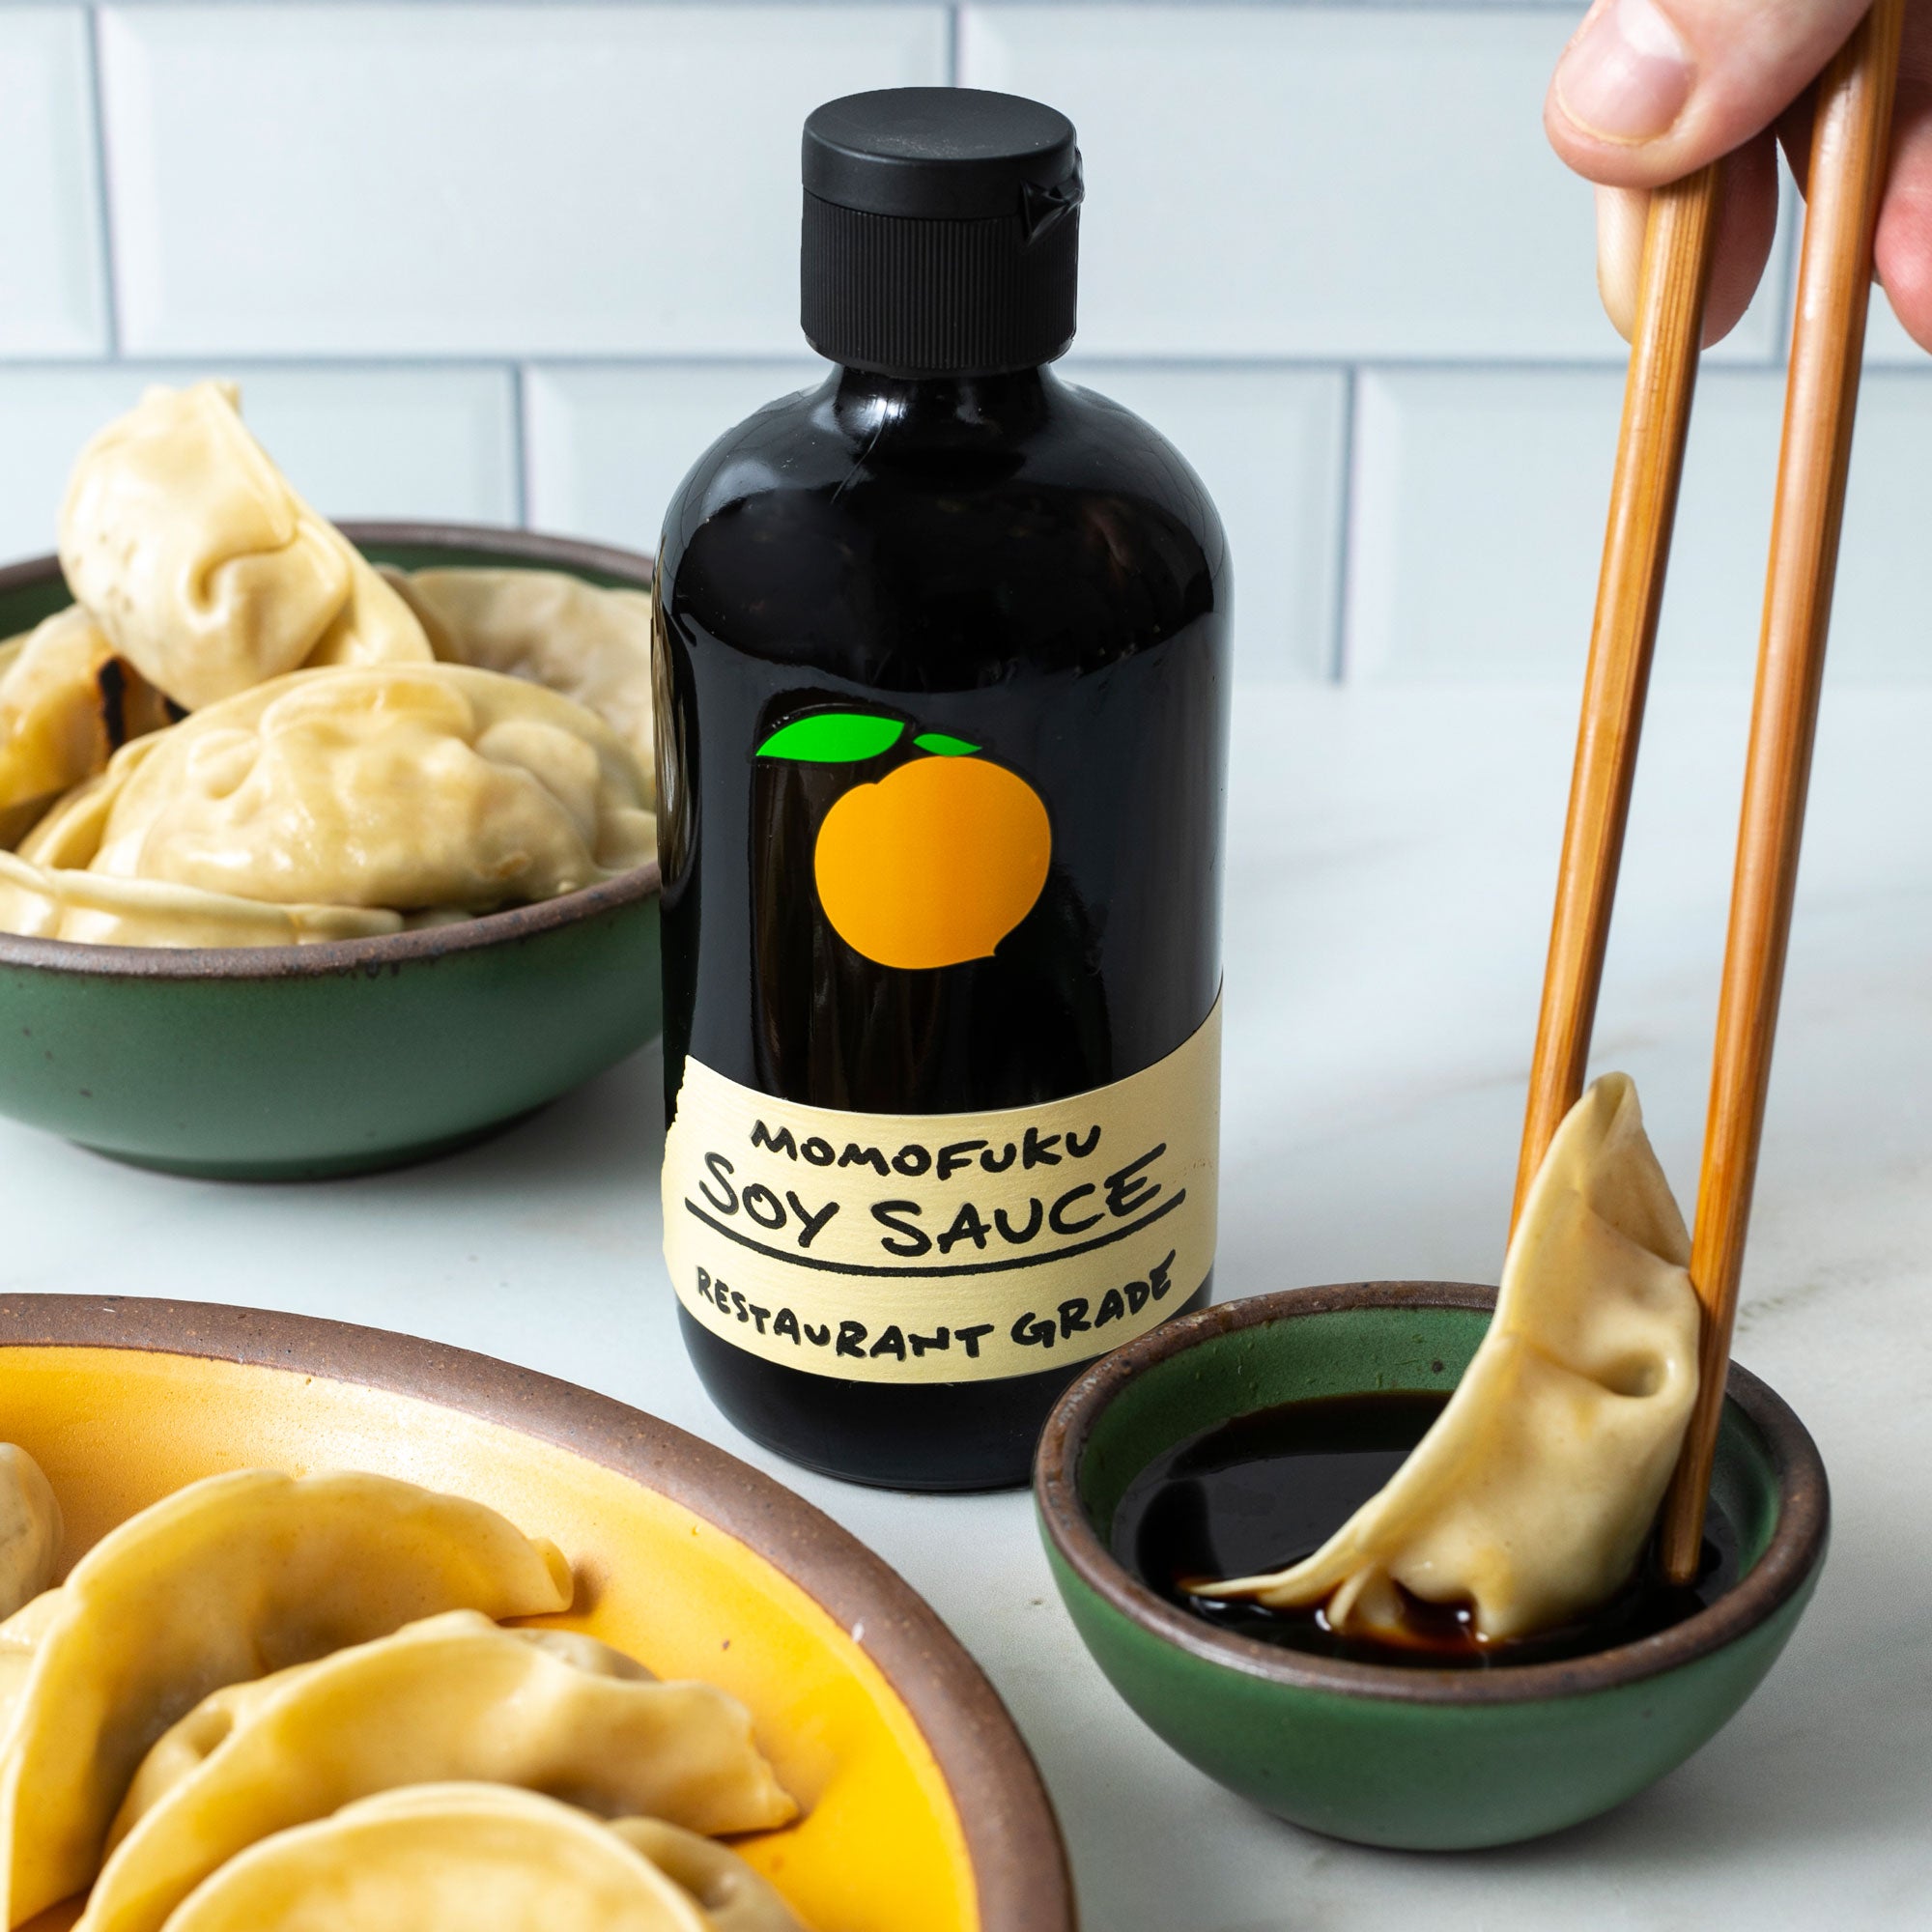 Soy Sauce – Momofuku Goods